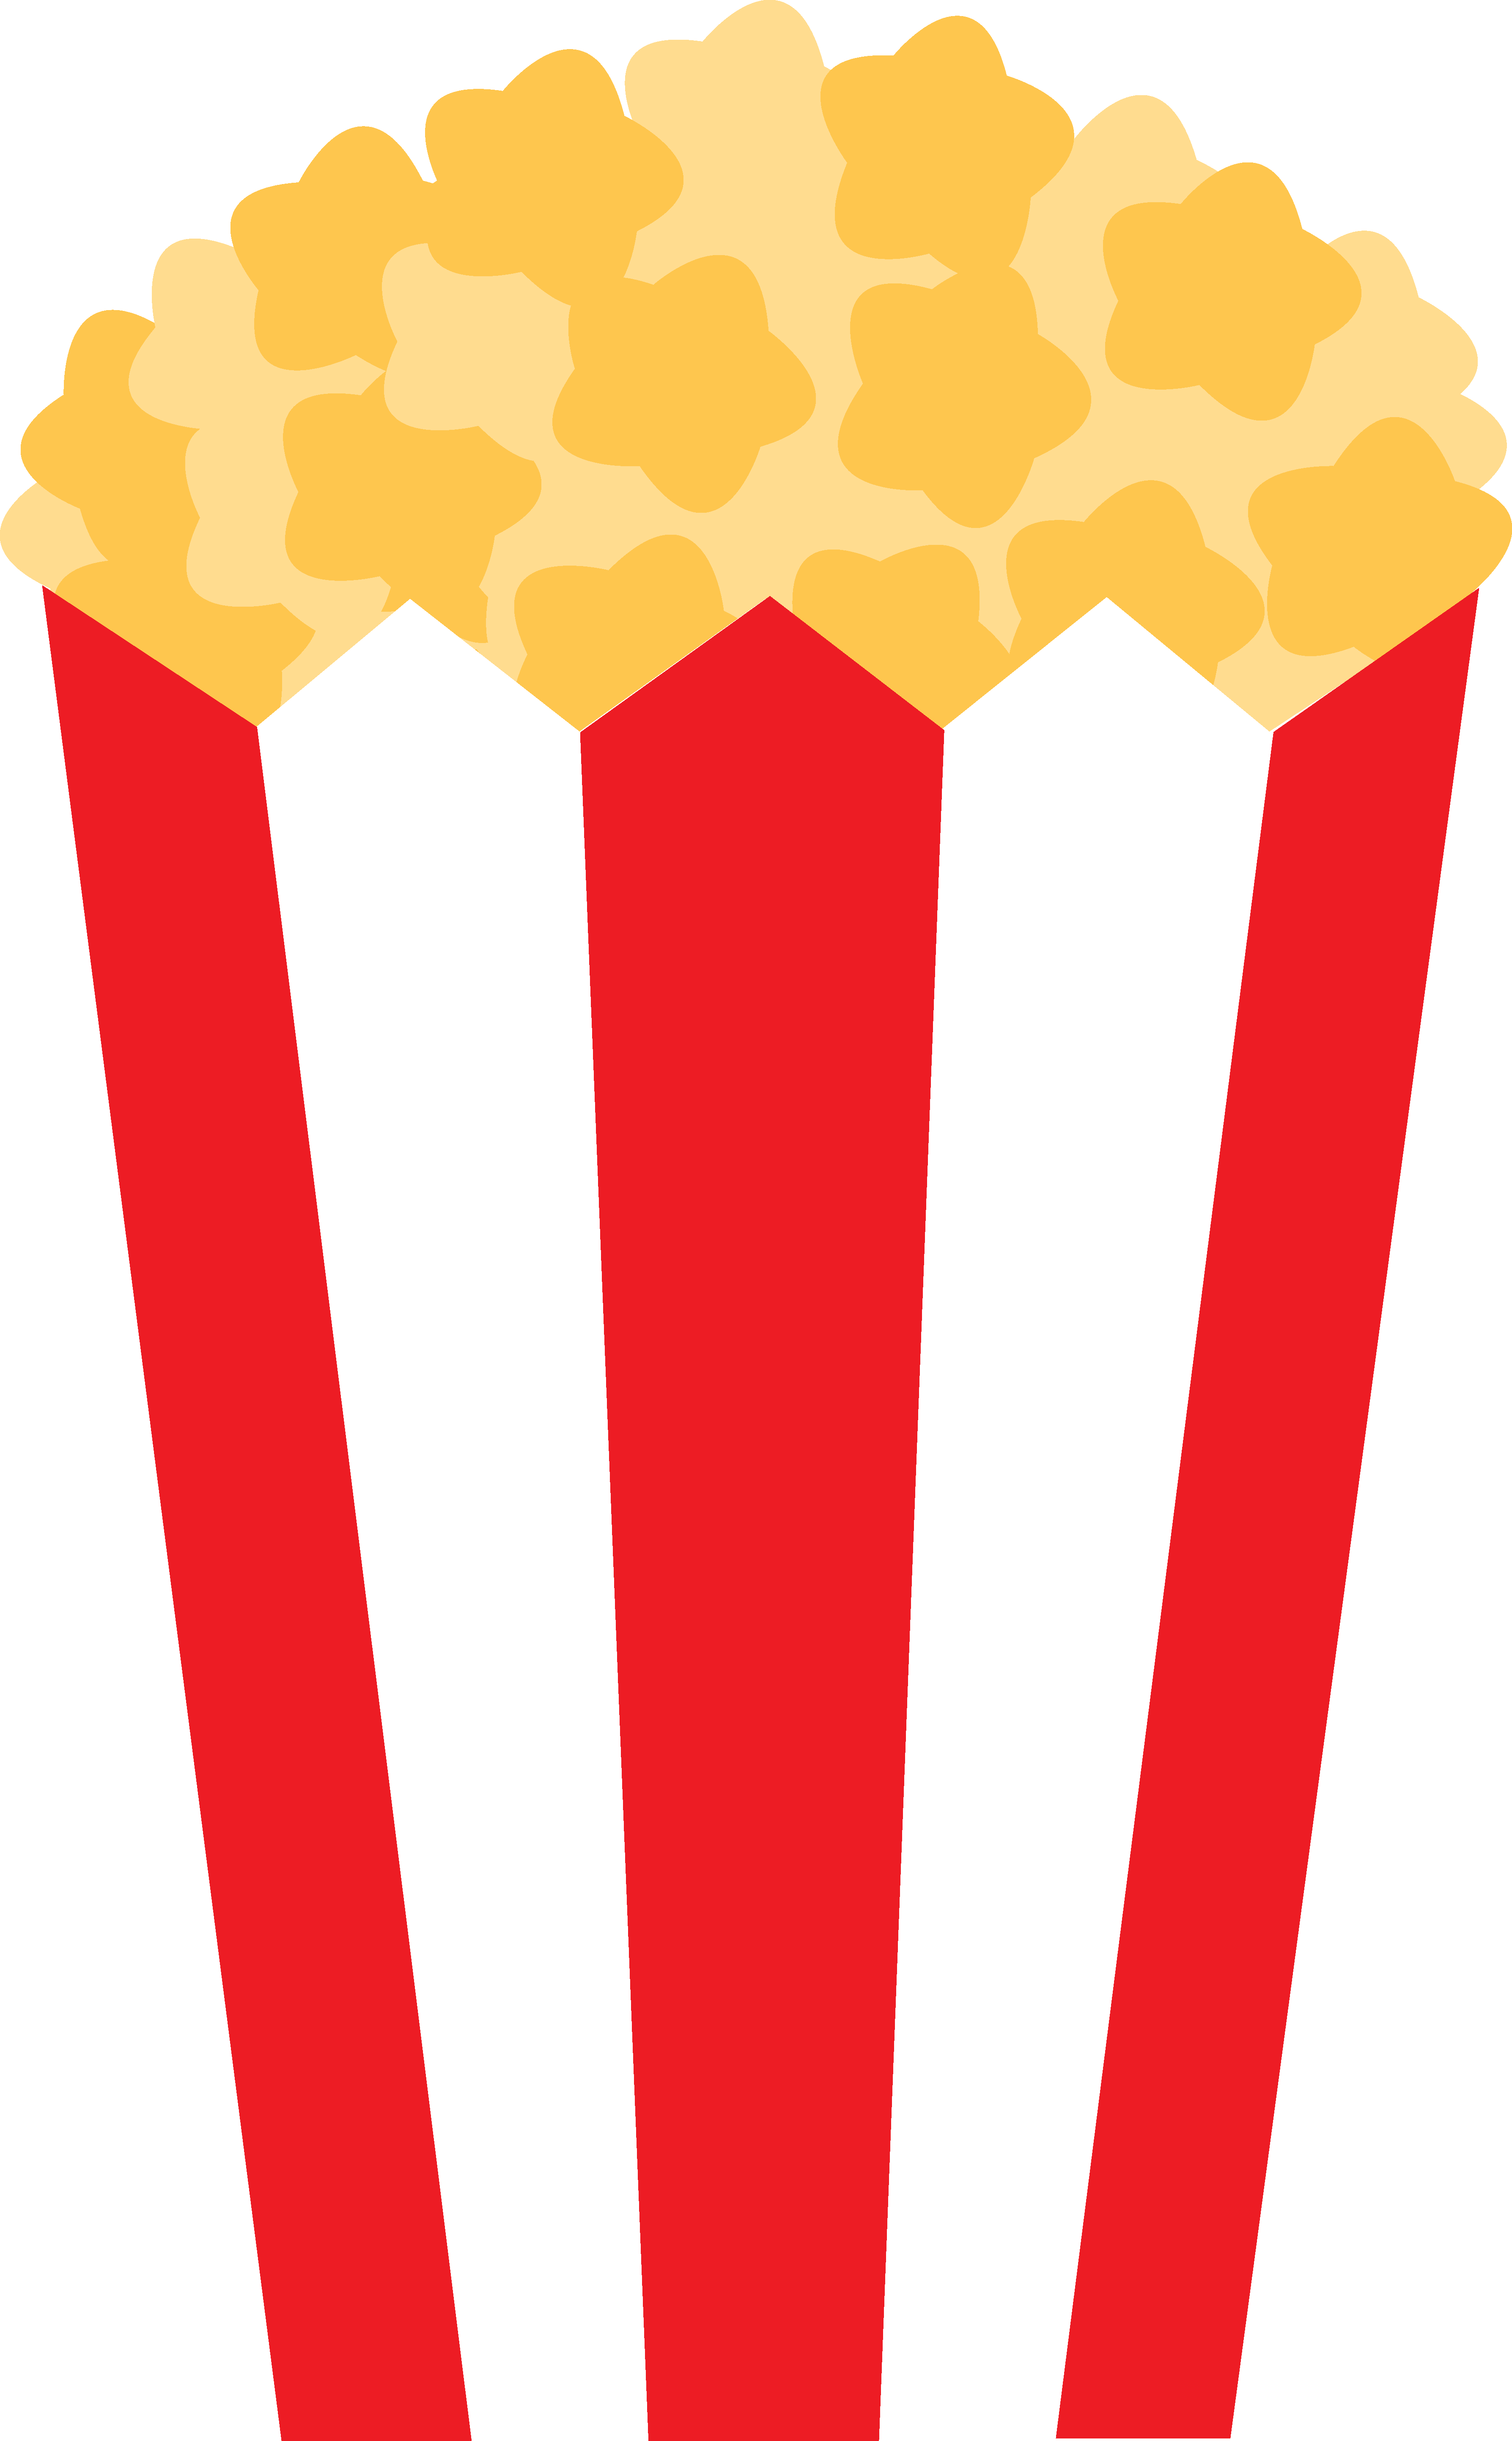 free-popcorn-tub-cliparts-download-free-popcorn-tub-cliparts-png